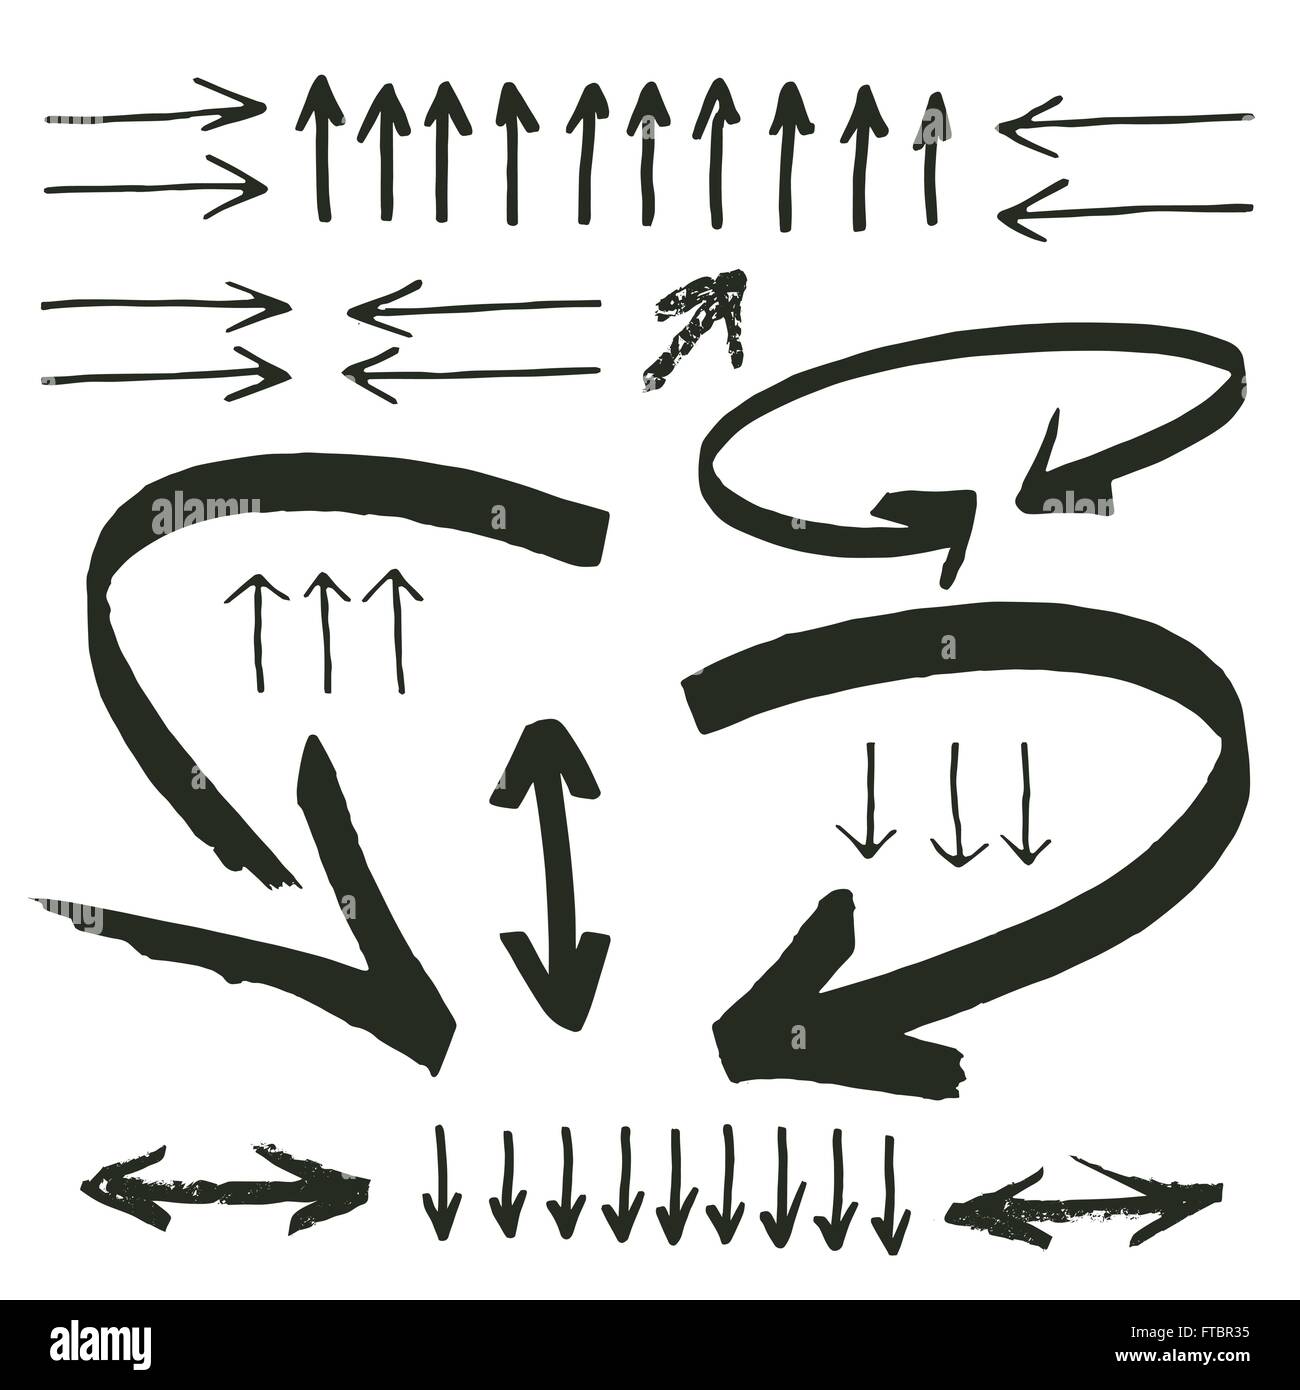 Vector hand drawn arrows collection Stock Photo